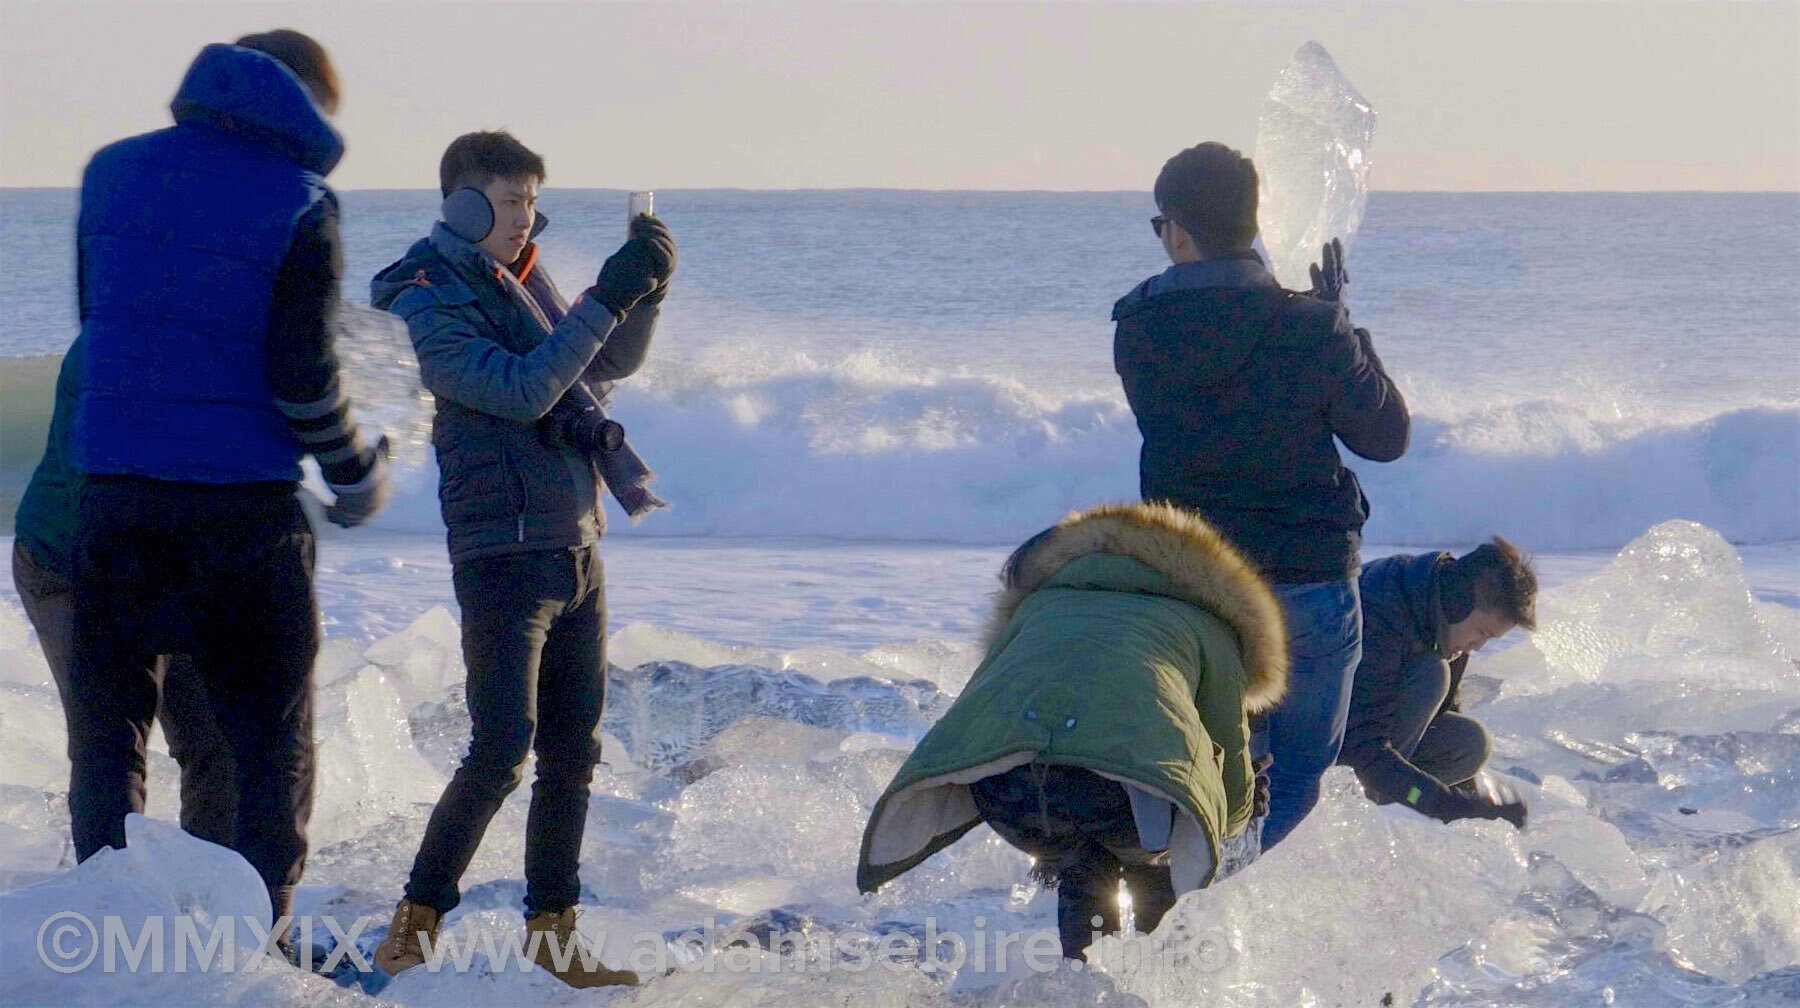 Chinese tourists with ice at Jokulsarlon - anthropocene.jpg